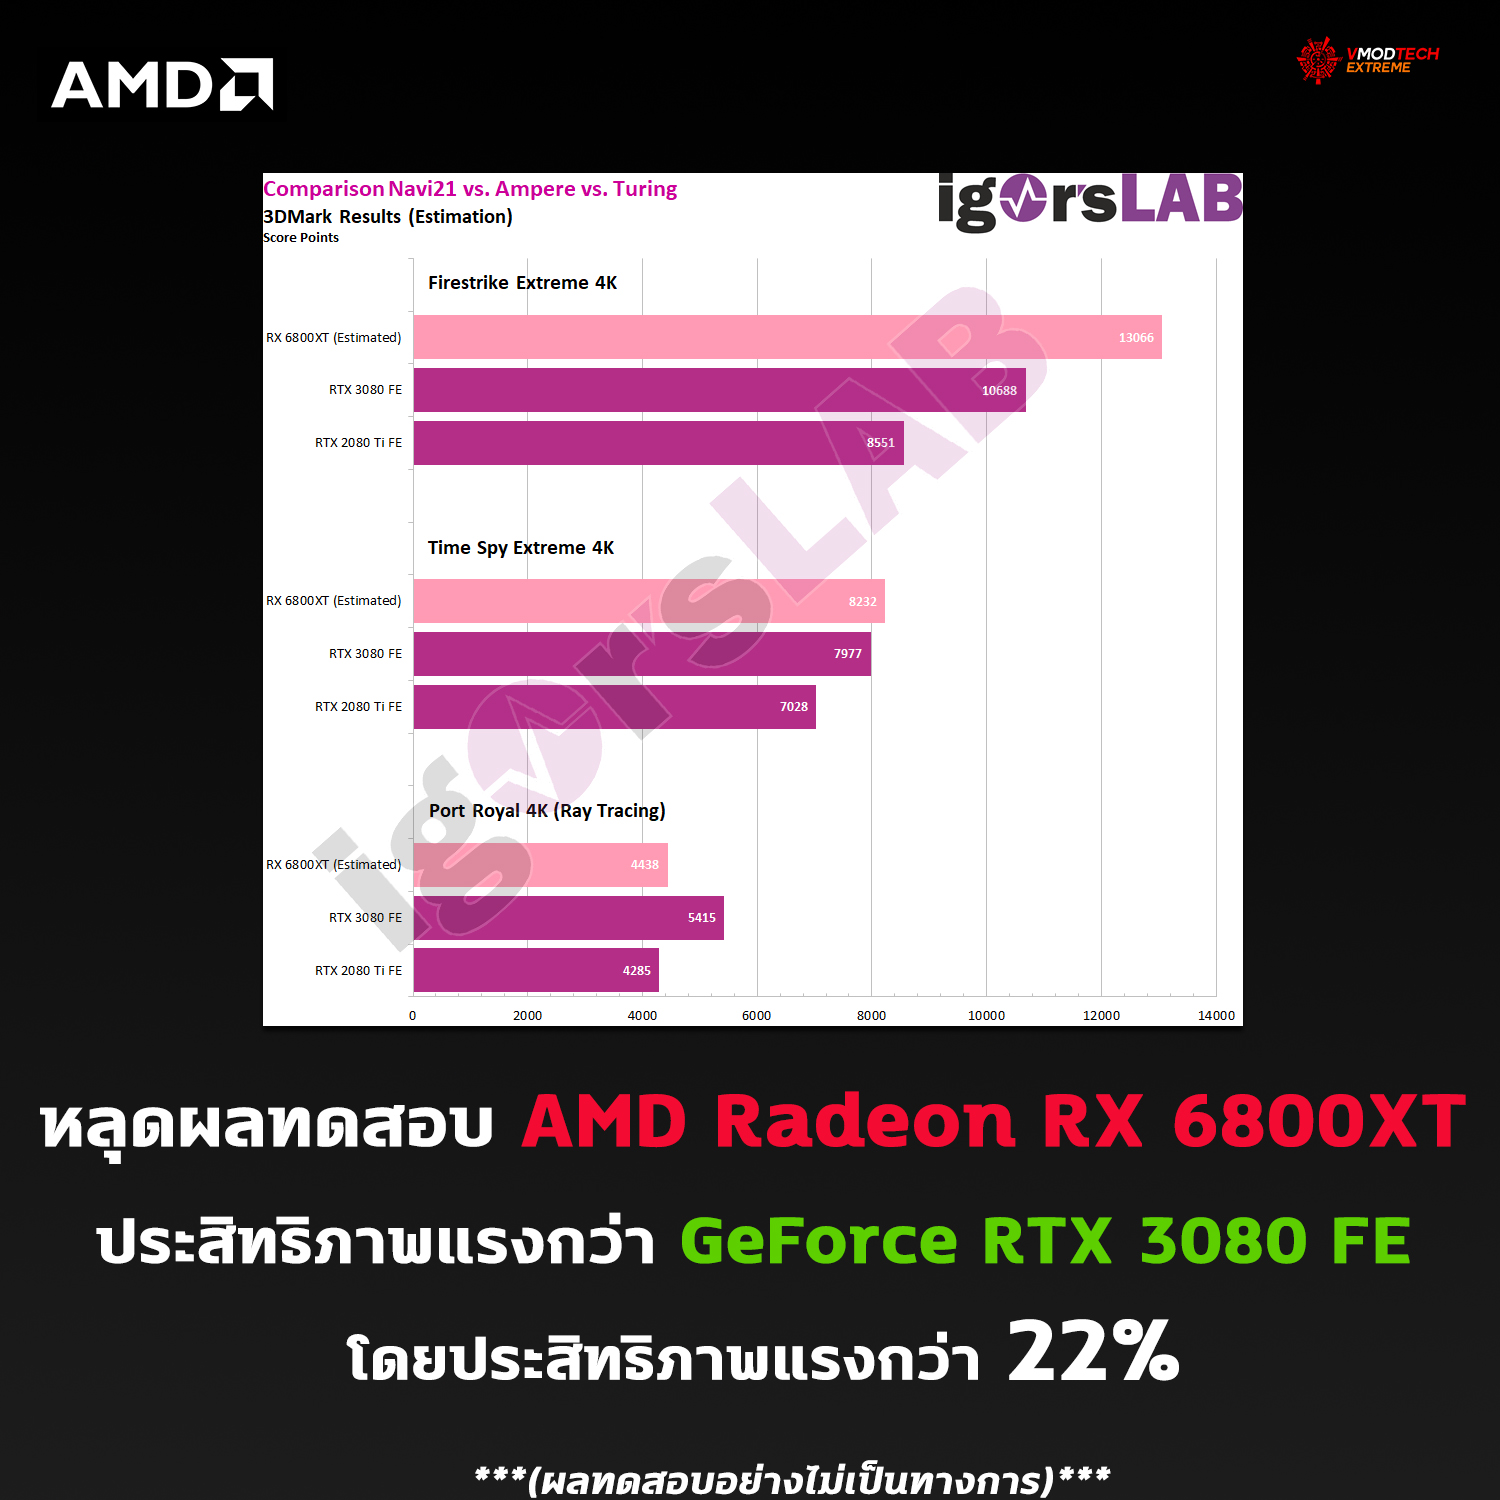 amd radeon rx 6800xt benchmark หลุดผลทดสอบ AMD Radeon RX 6800XT ประสิทธิภาพแรงกว่า GeForce RTX 3080 FE และ GeForce RTX 2080 Ti กันเลยทีเดียว